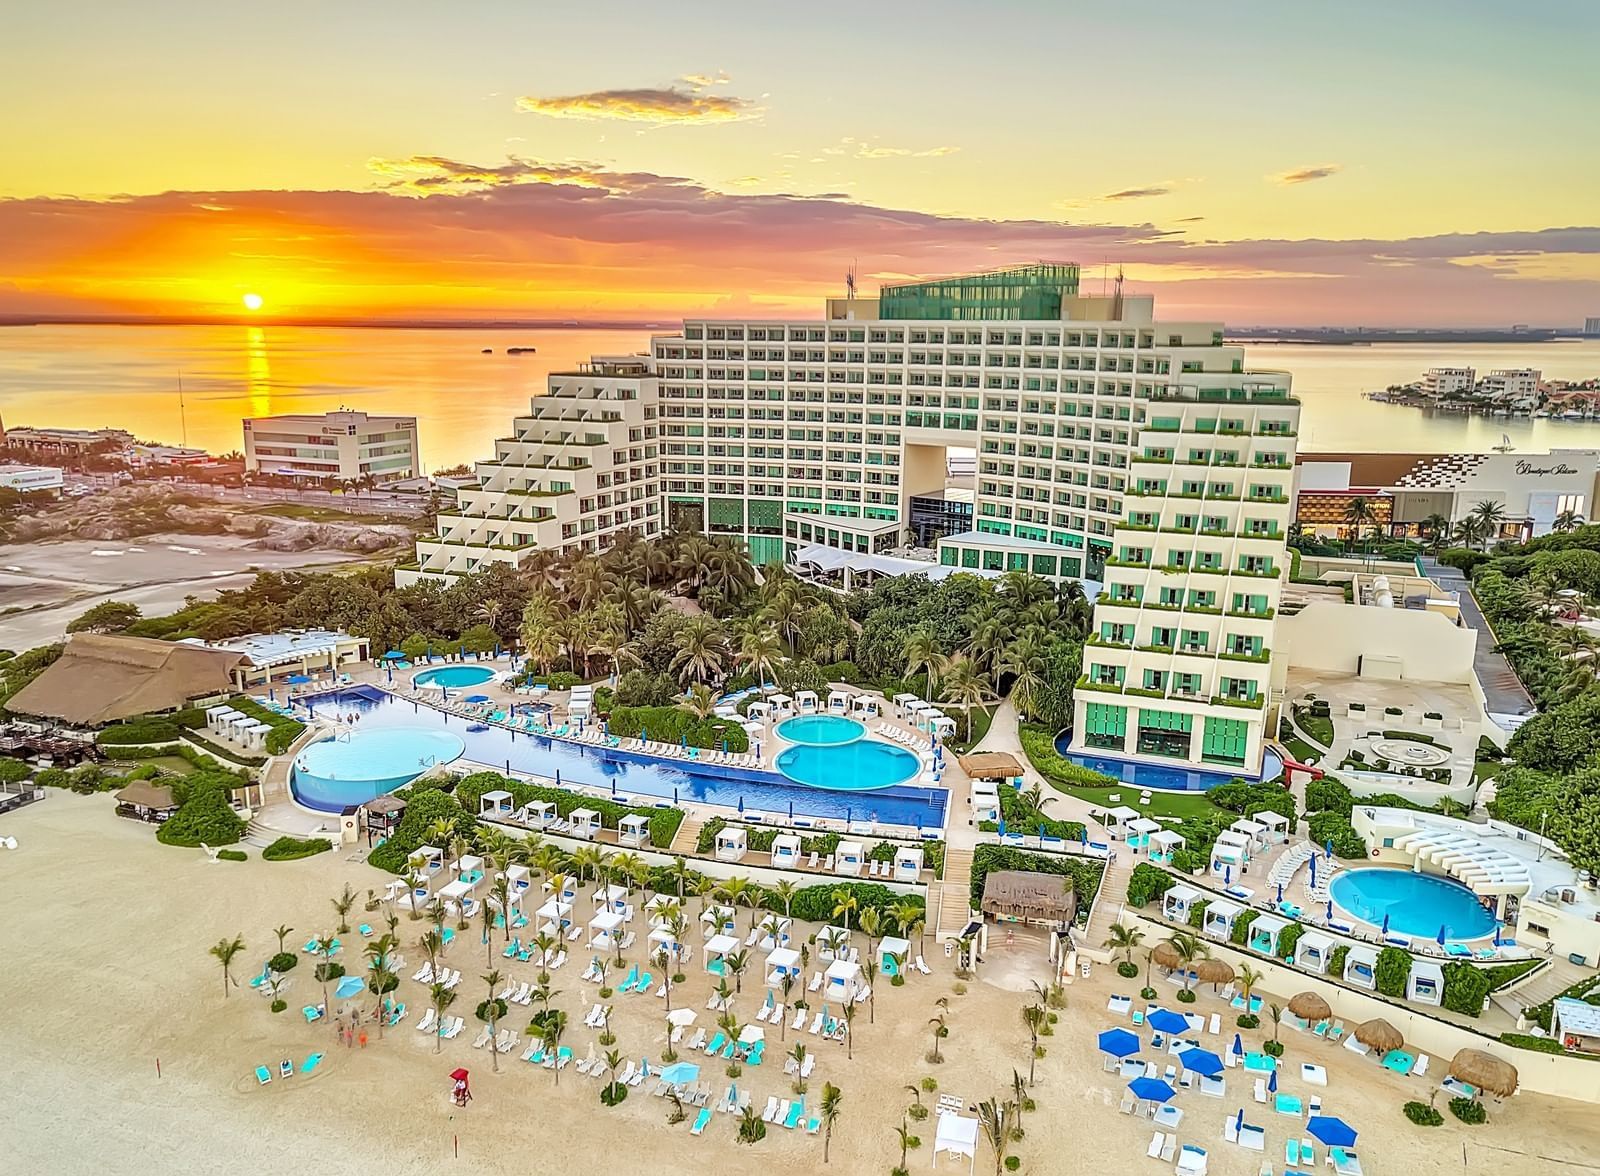 Aerial view of the Live Aqua Beach Resort Cancun